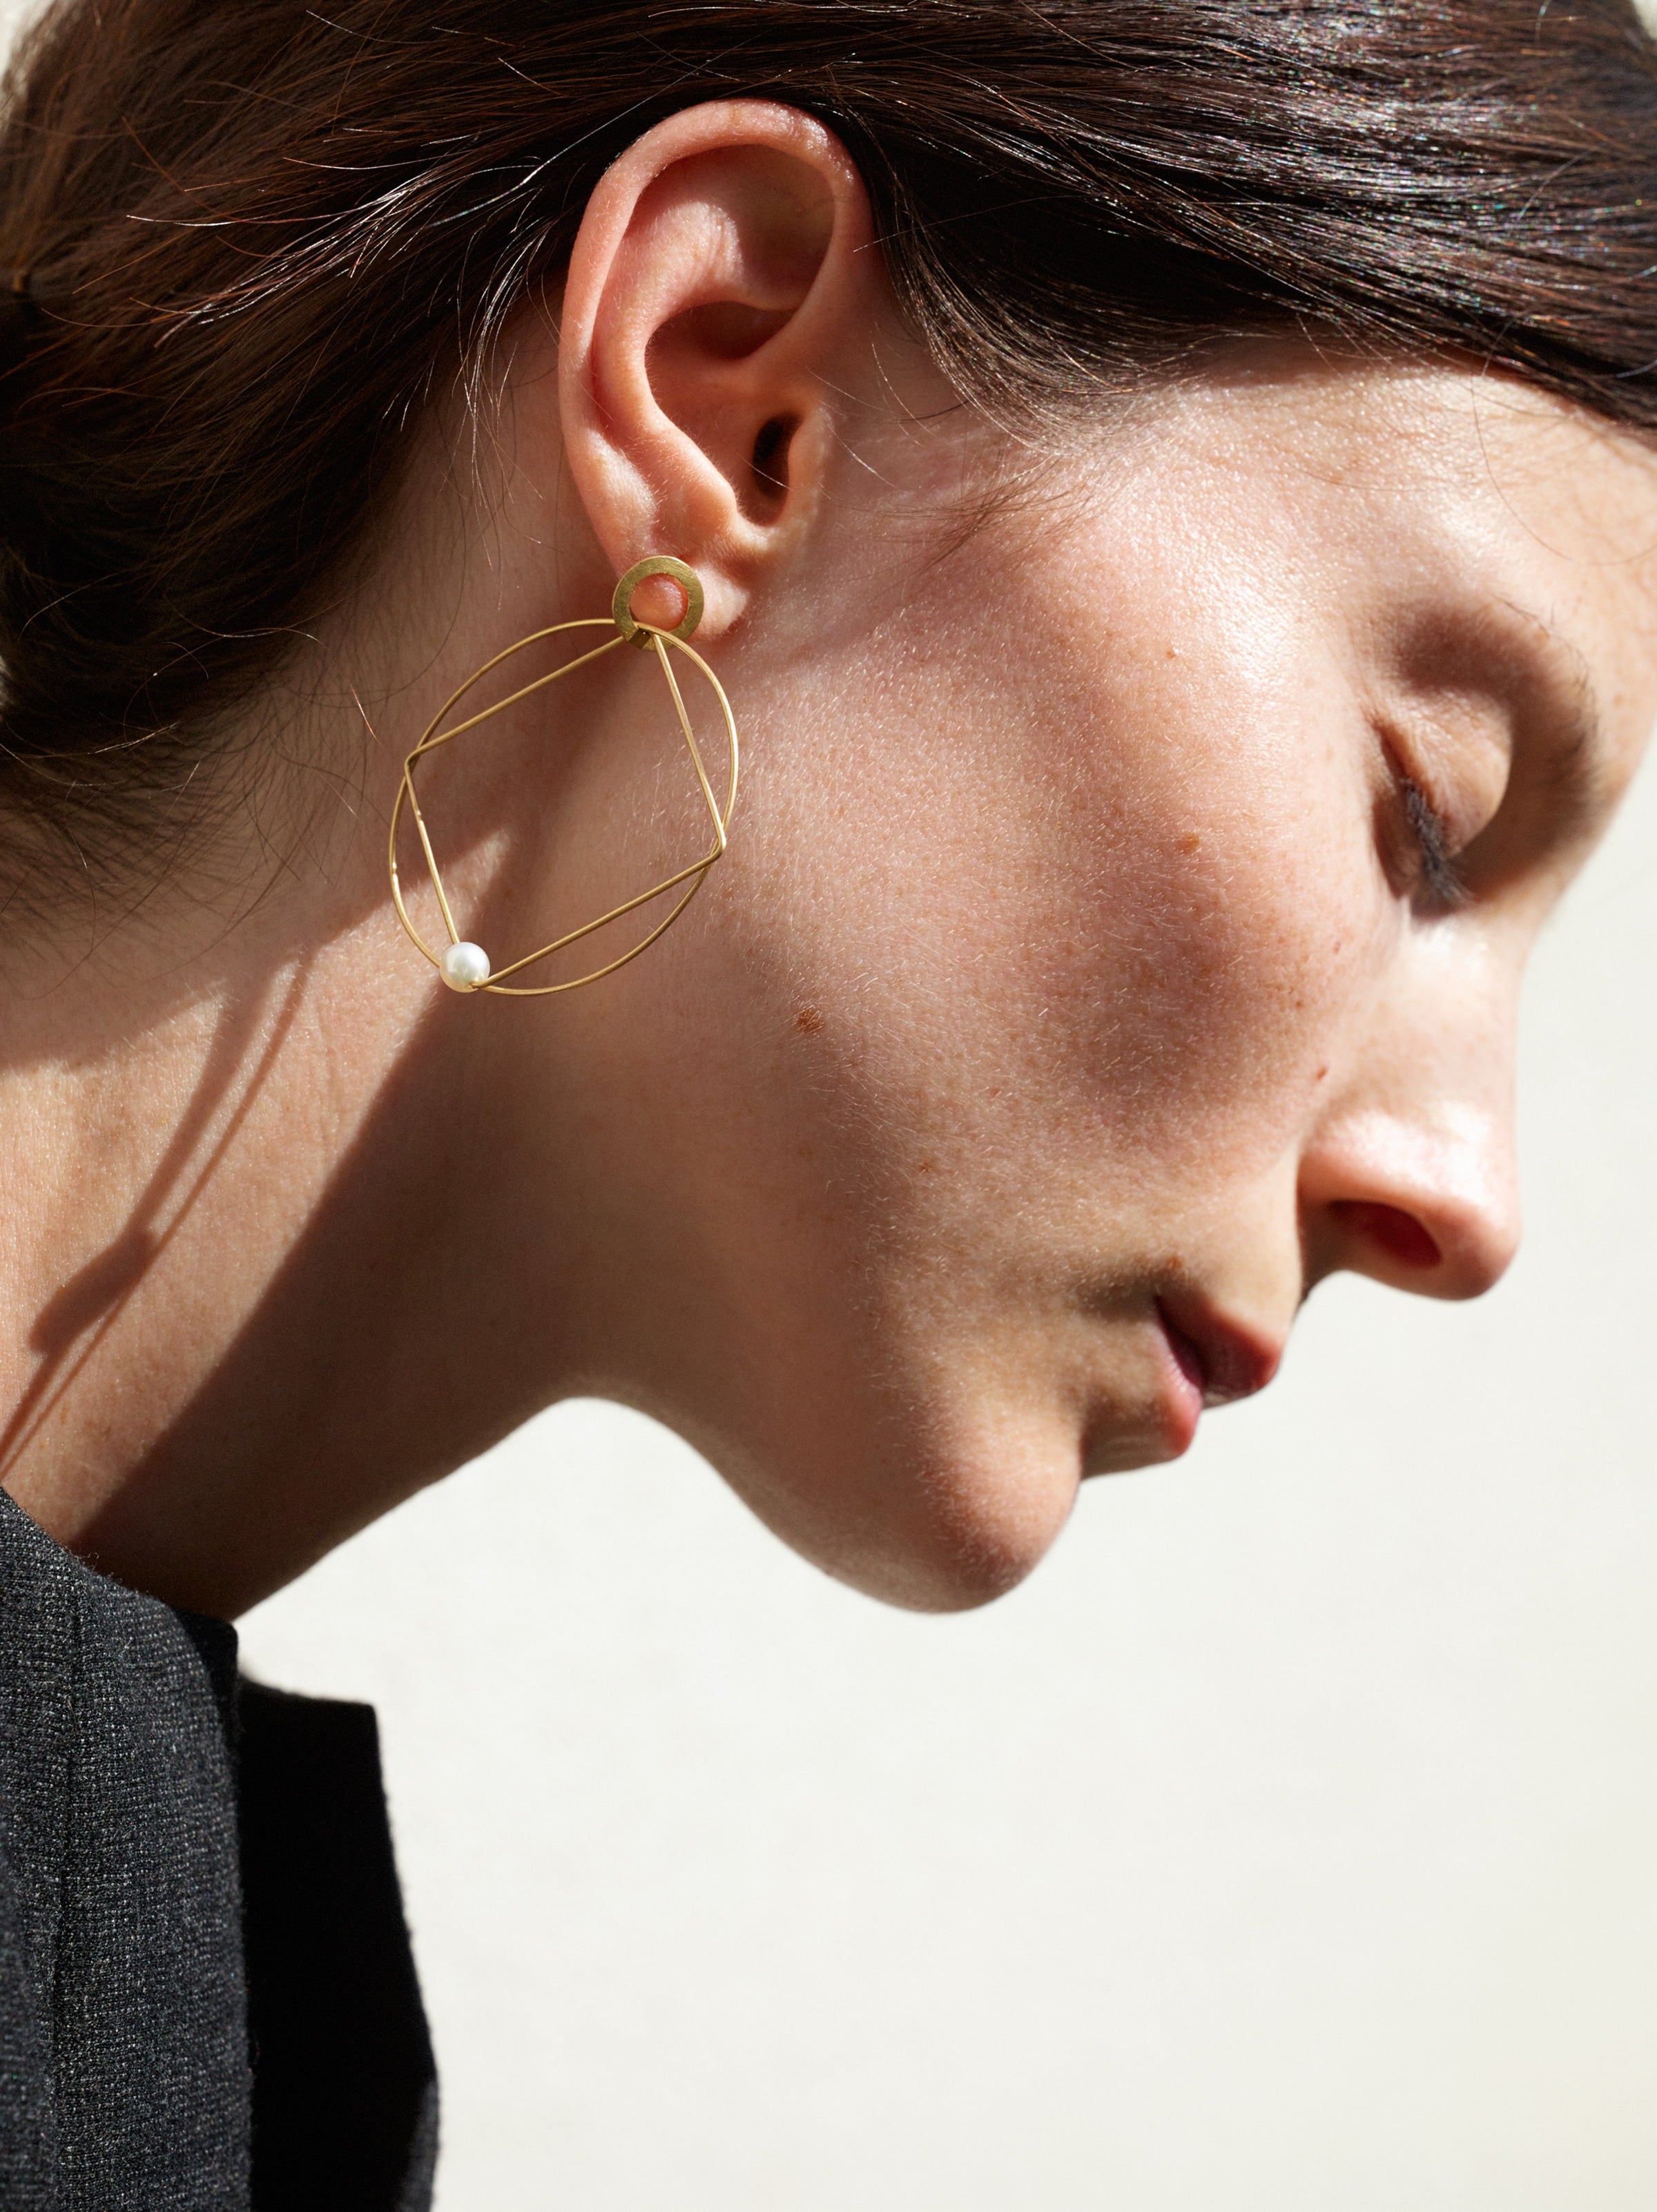 18KT yellow gold earrings with akoya pearls worn by female ear - Cerchio Quadrato E